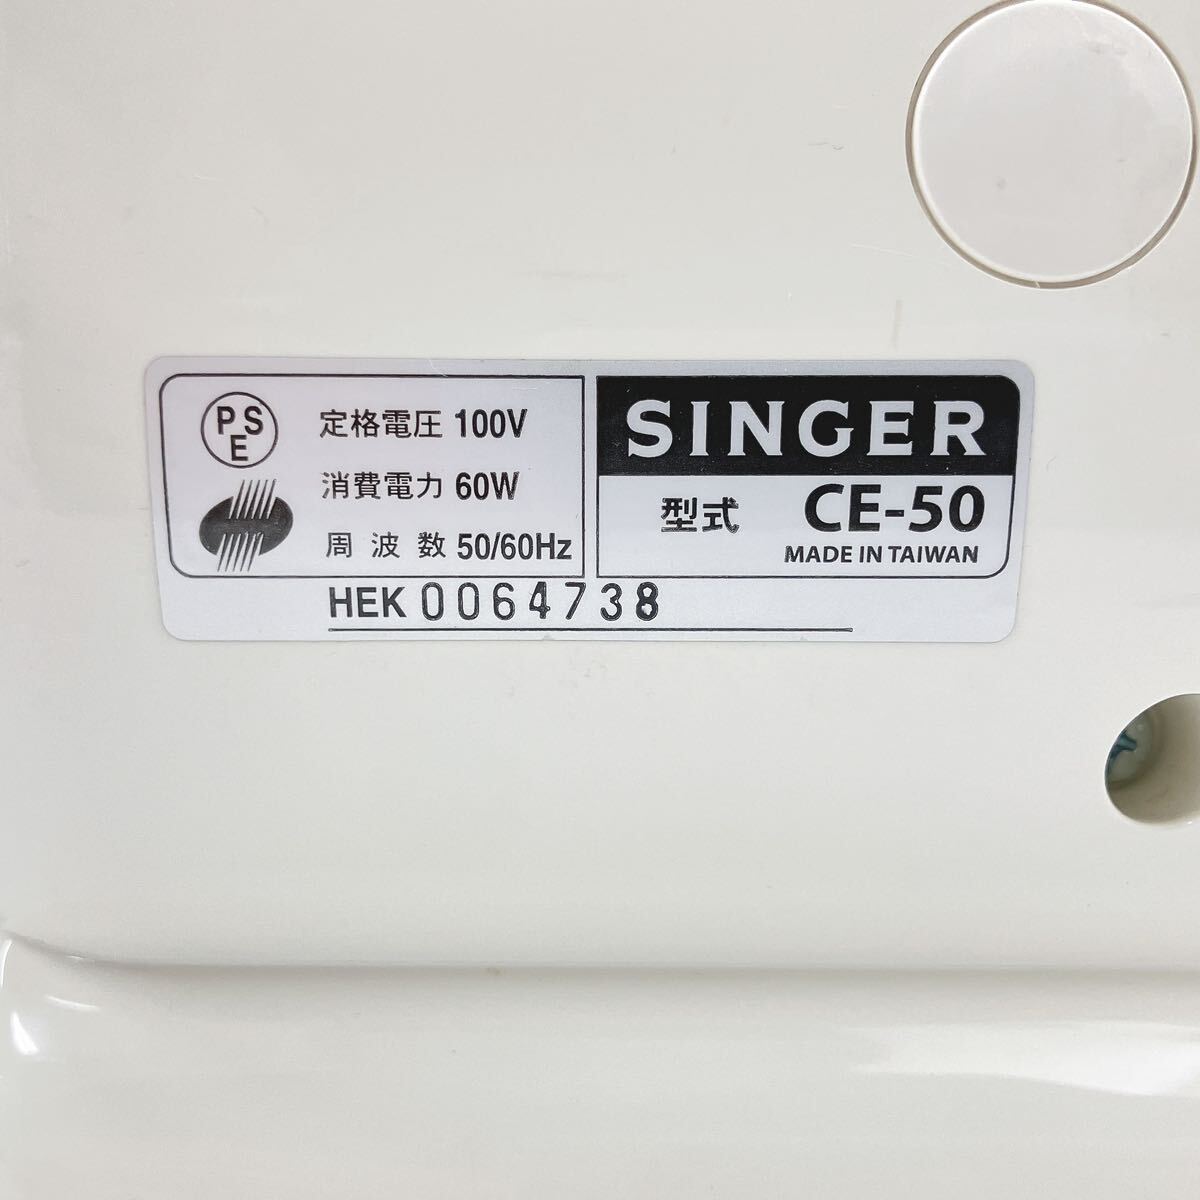 SINGER シンガー クレエ 家庭用電子ミシン CE-50 手工芸 裁縫 R阿0507_画像7